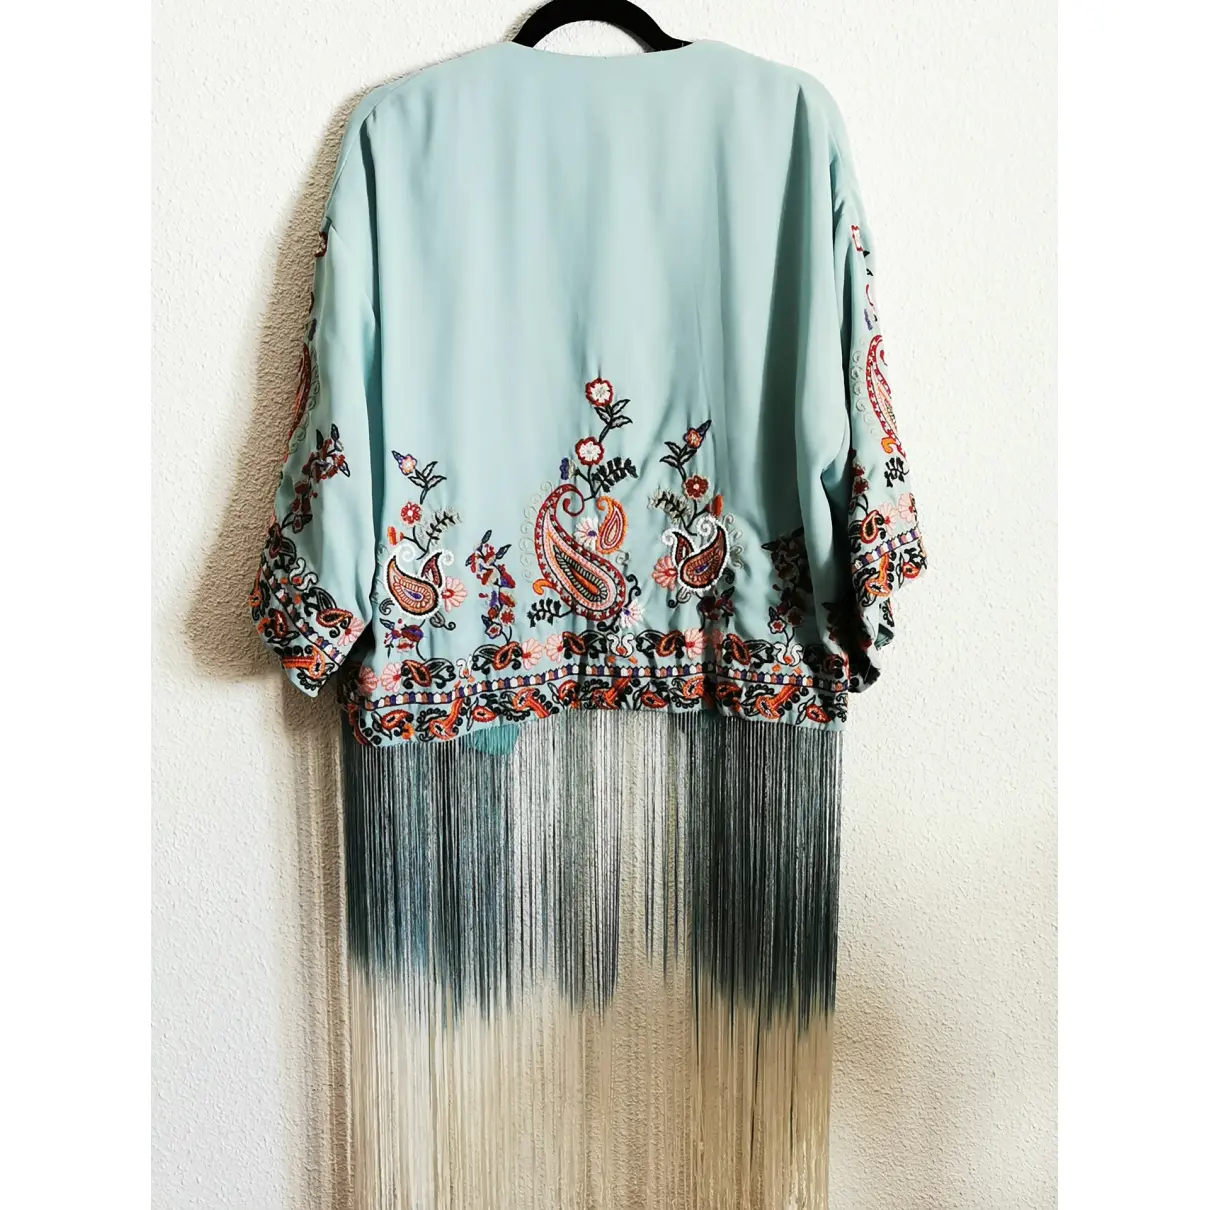 Buy Zara Turquoise Polyester Jacket online